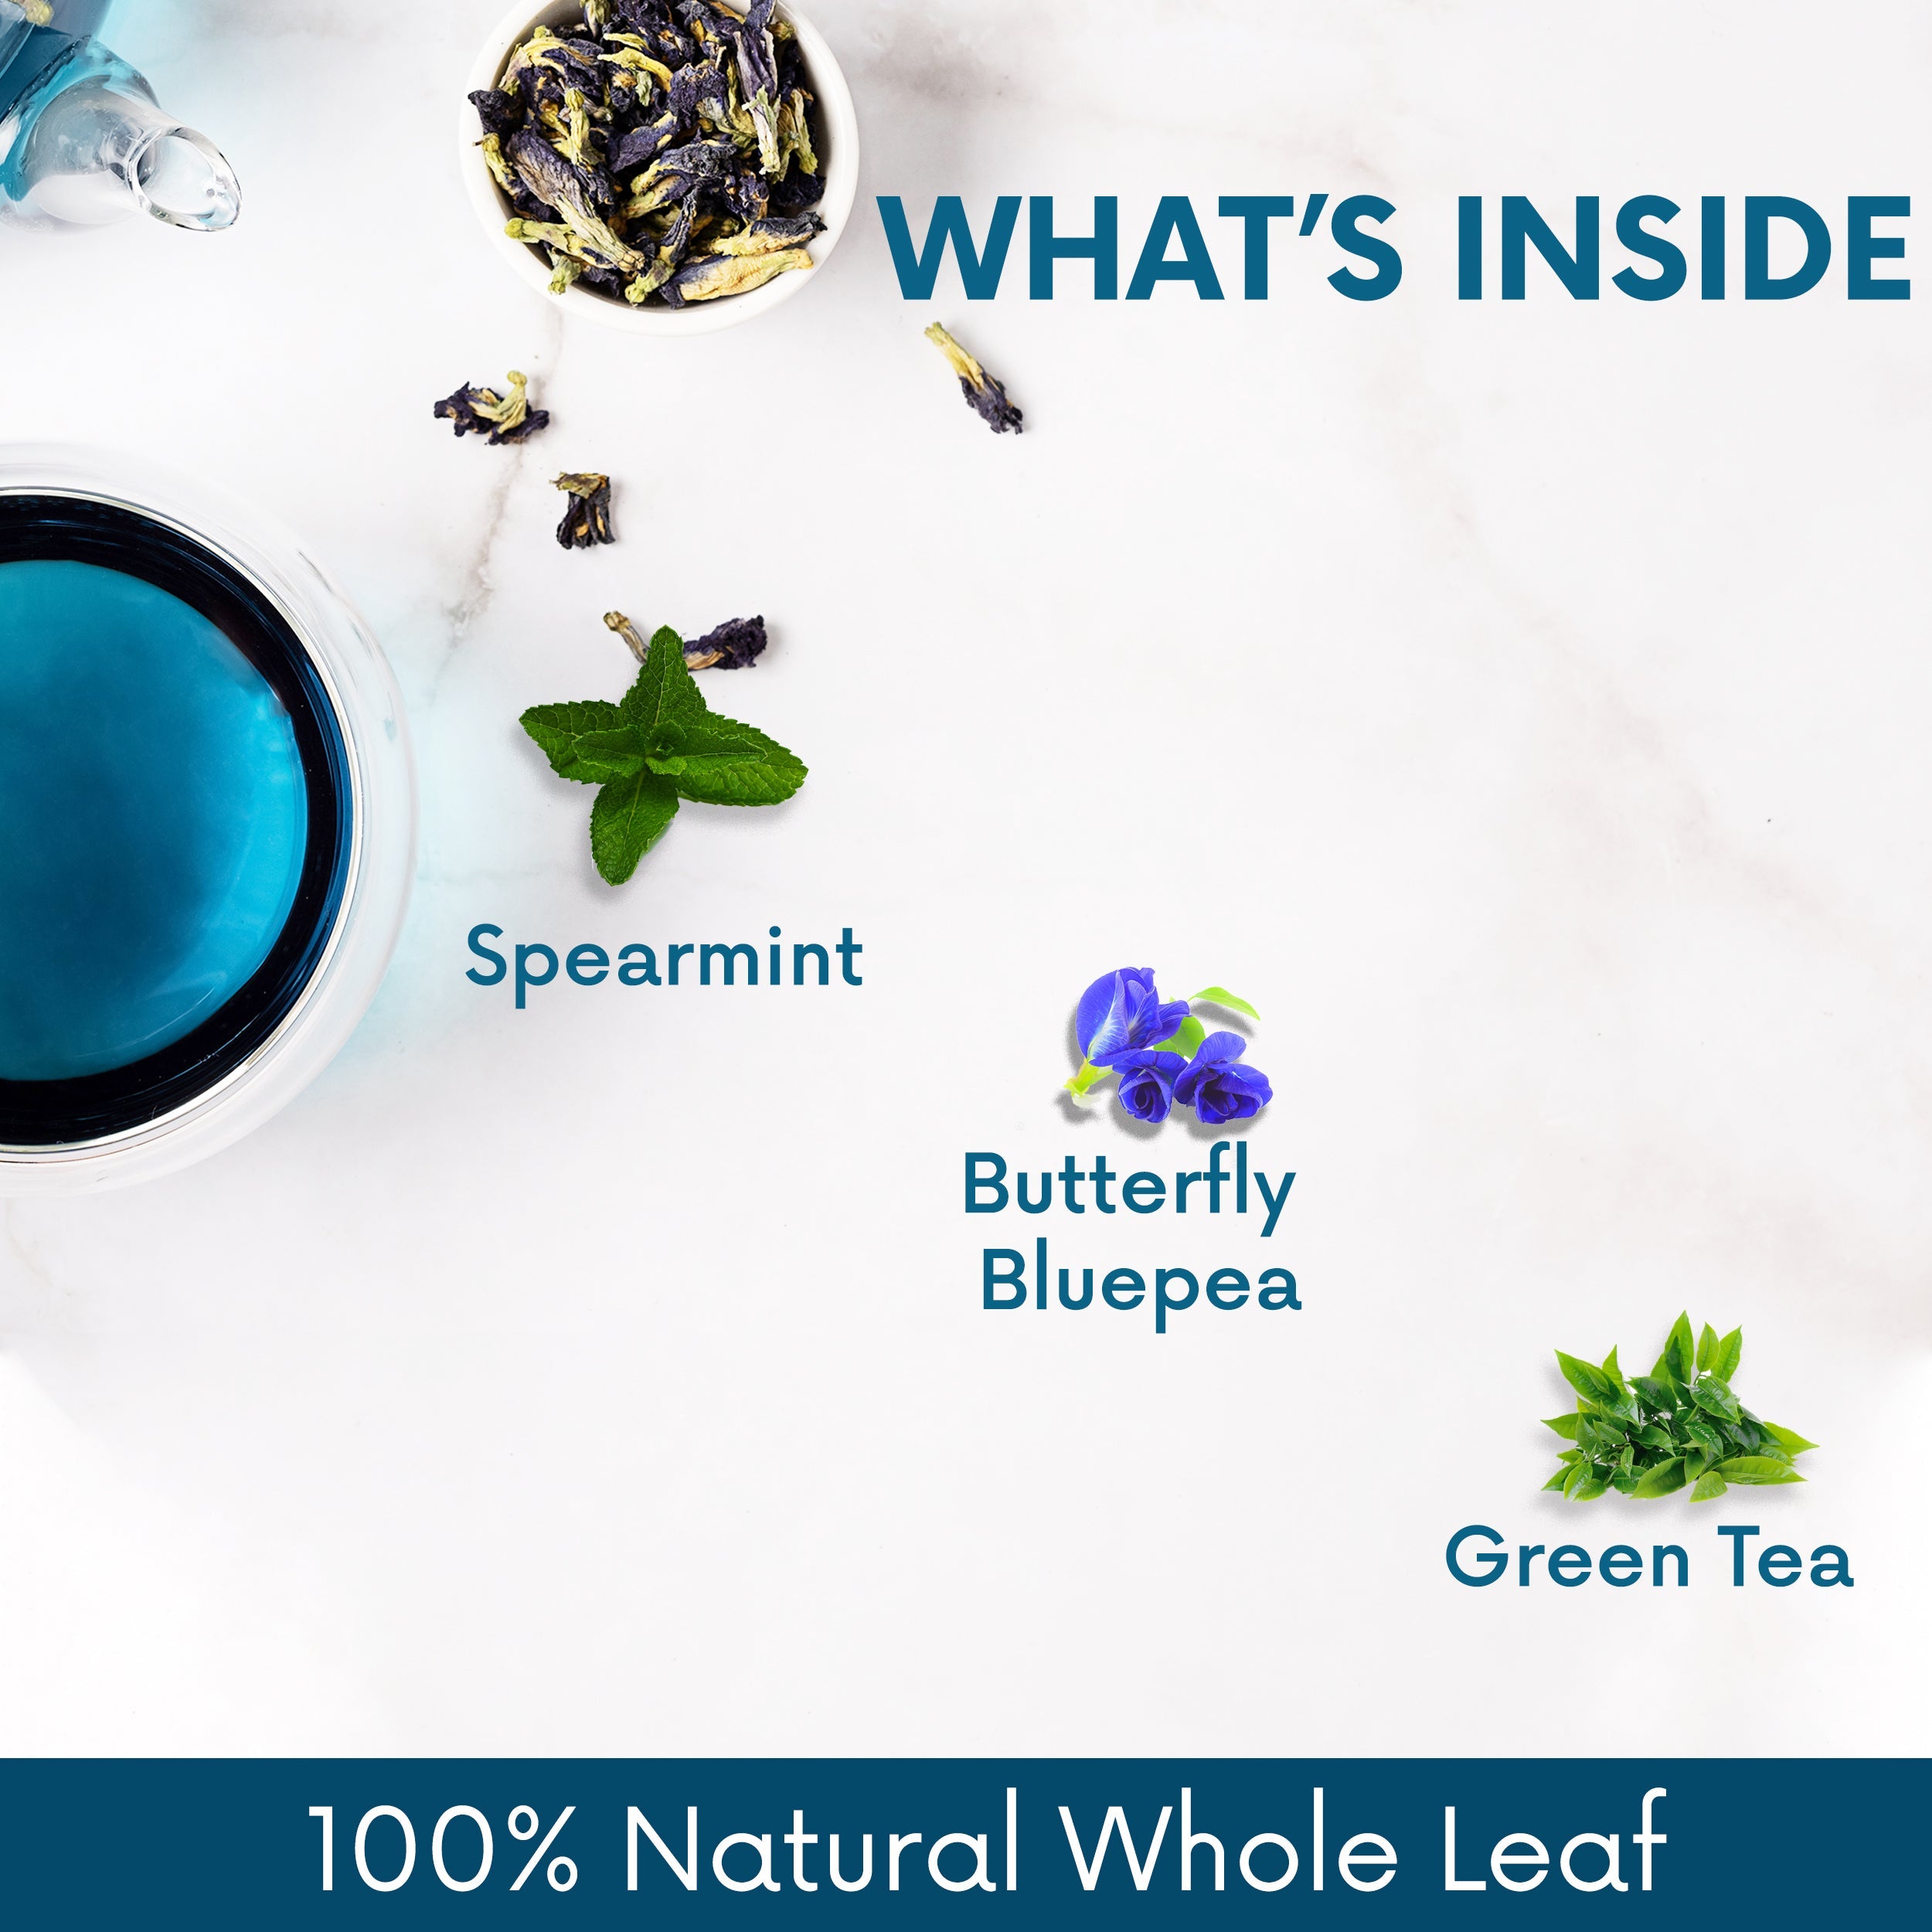 The Tea Ark Butterfly Blue Pea Flower Tea, Spearmint Green Tea, for Weight & Stress Management